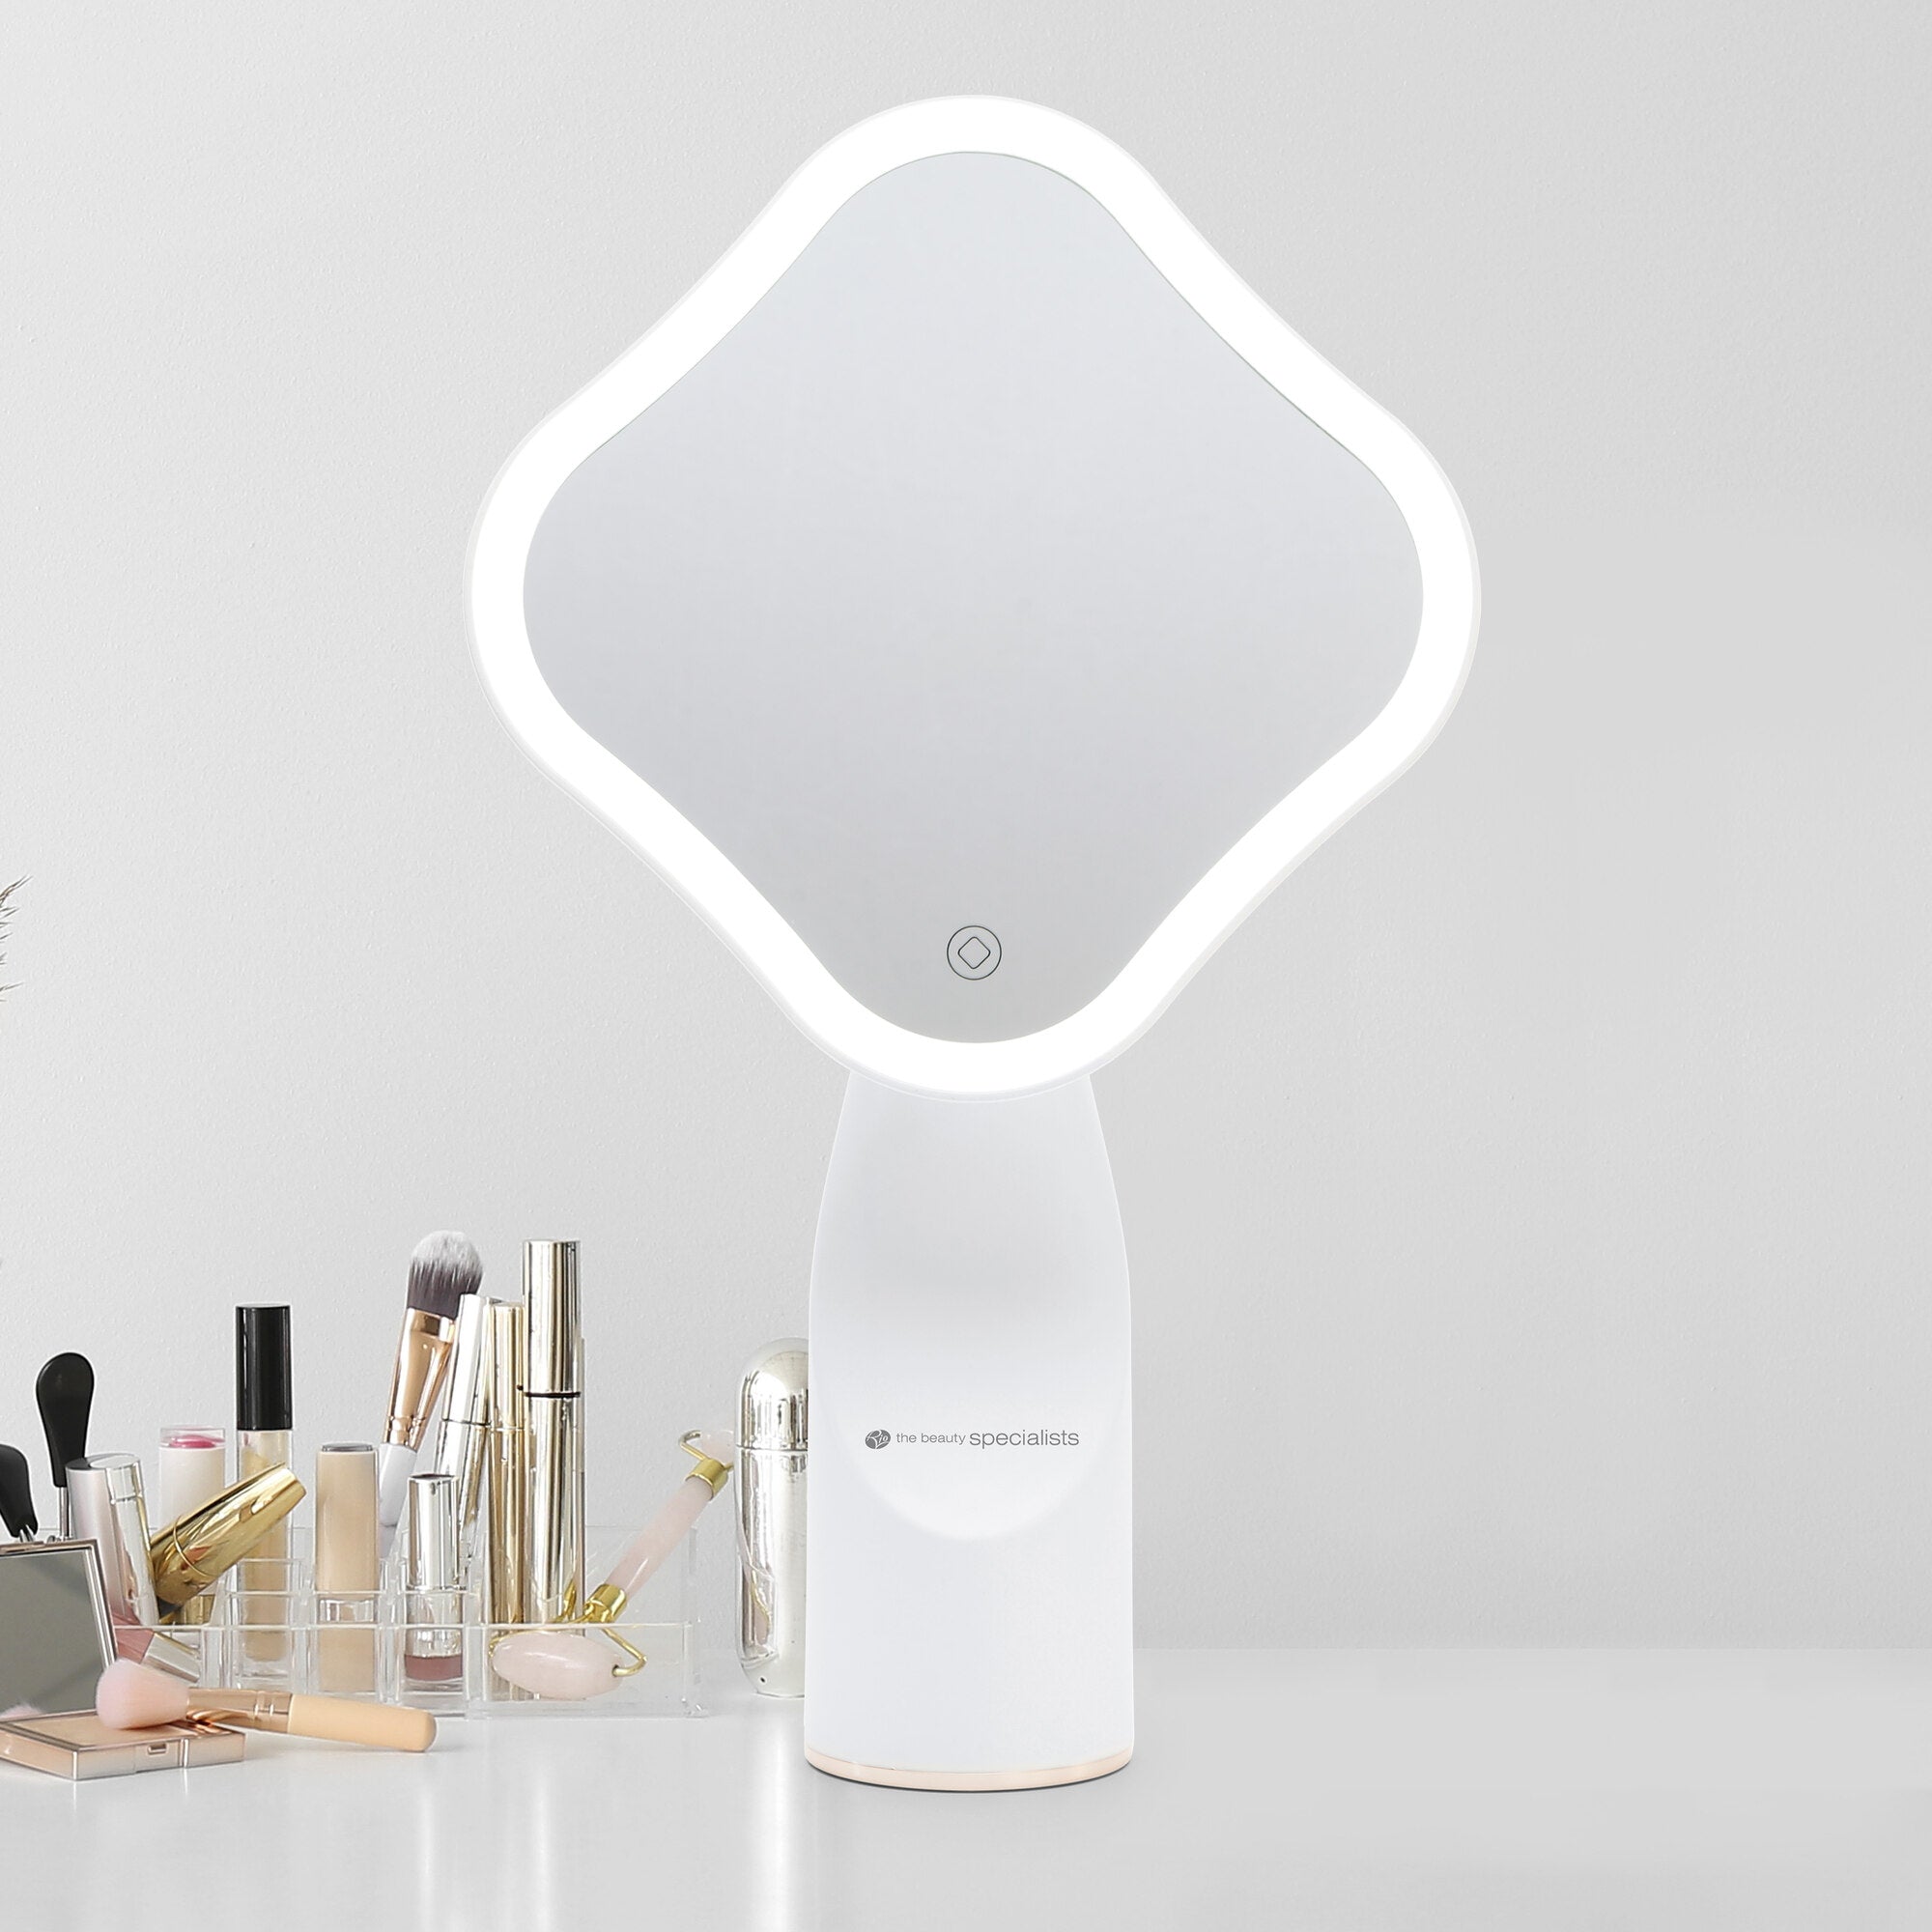 Illuminated Full Size Beauty Mirror